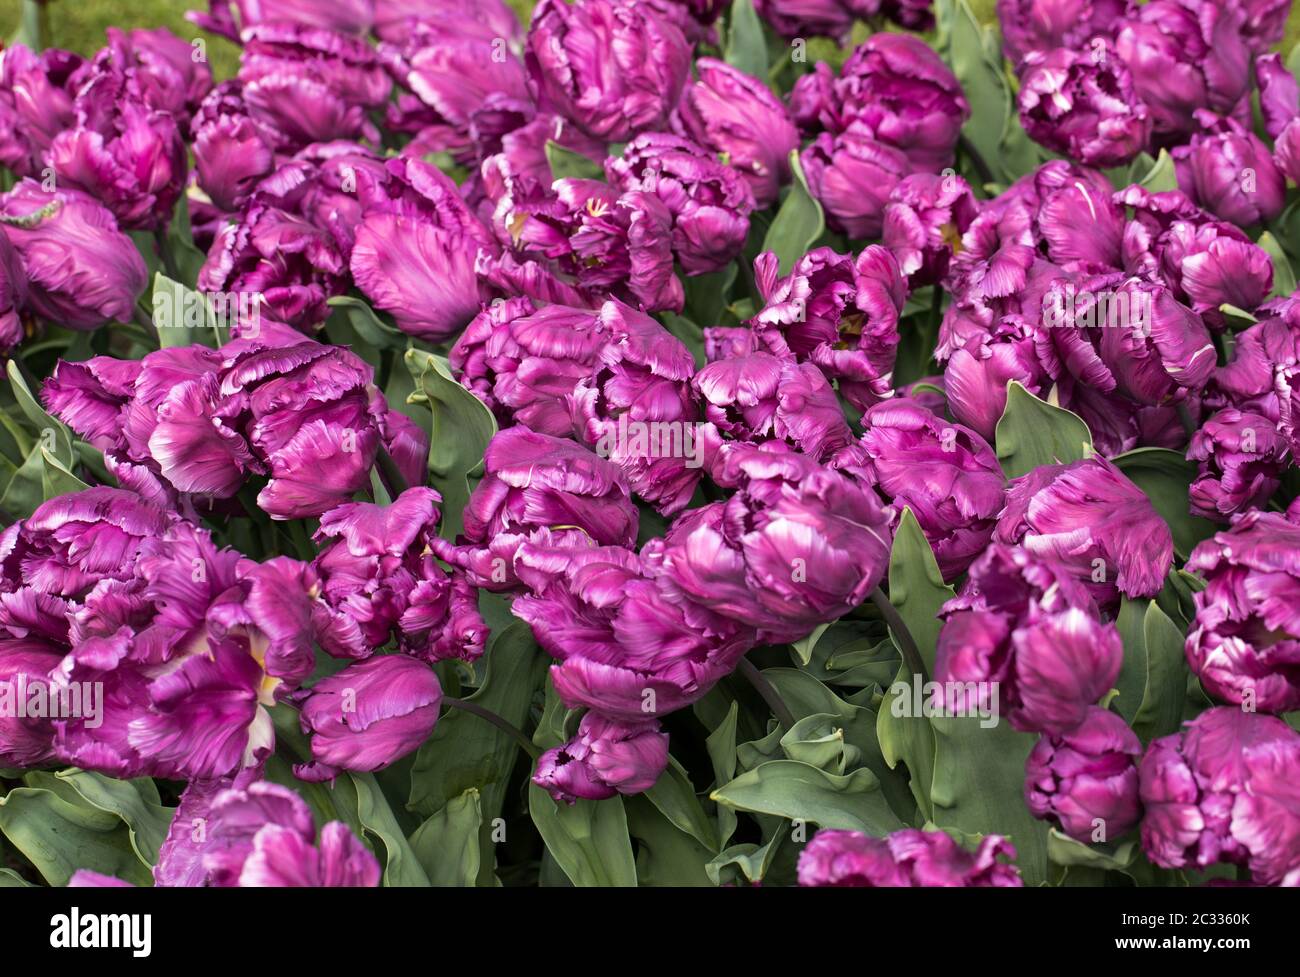 purple tulips flowers blooming in a garden Stock Photo